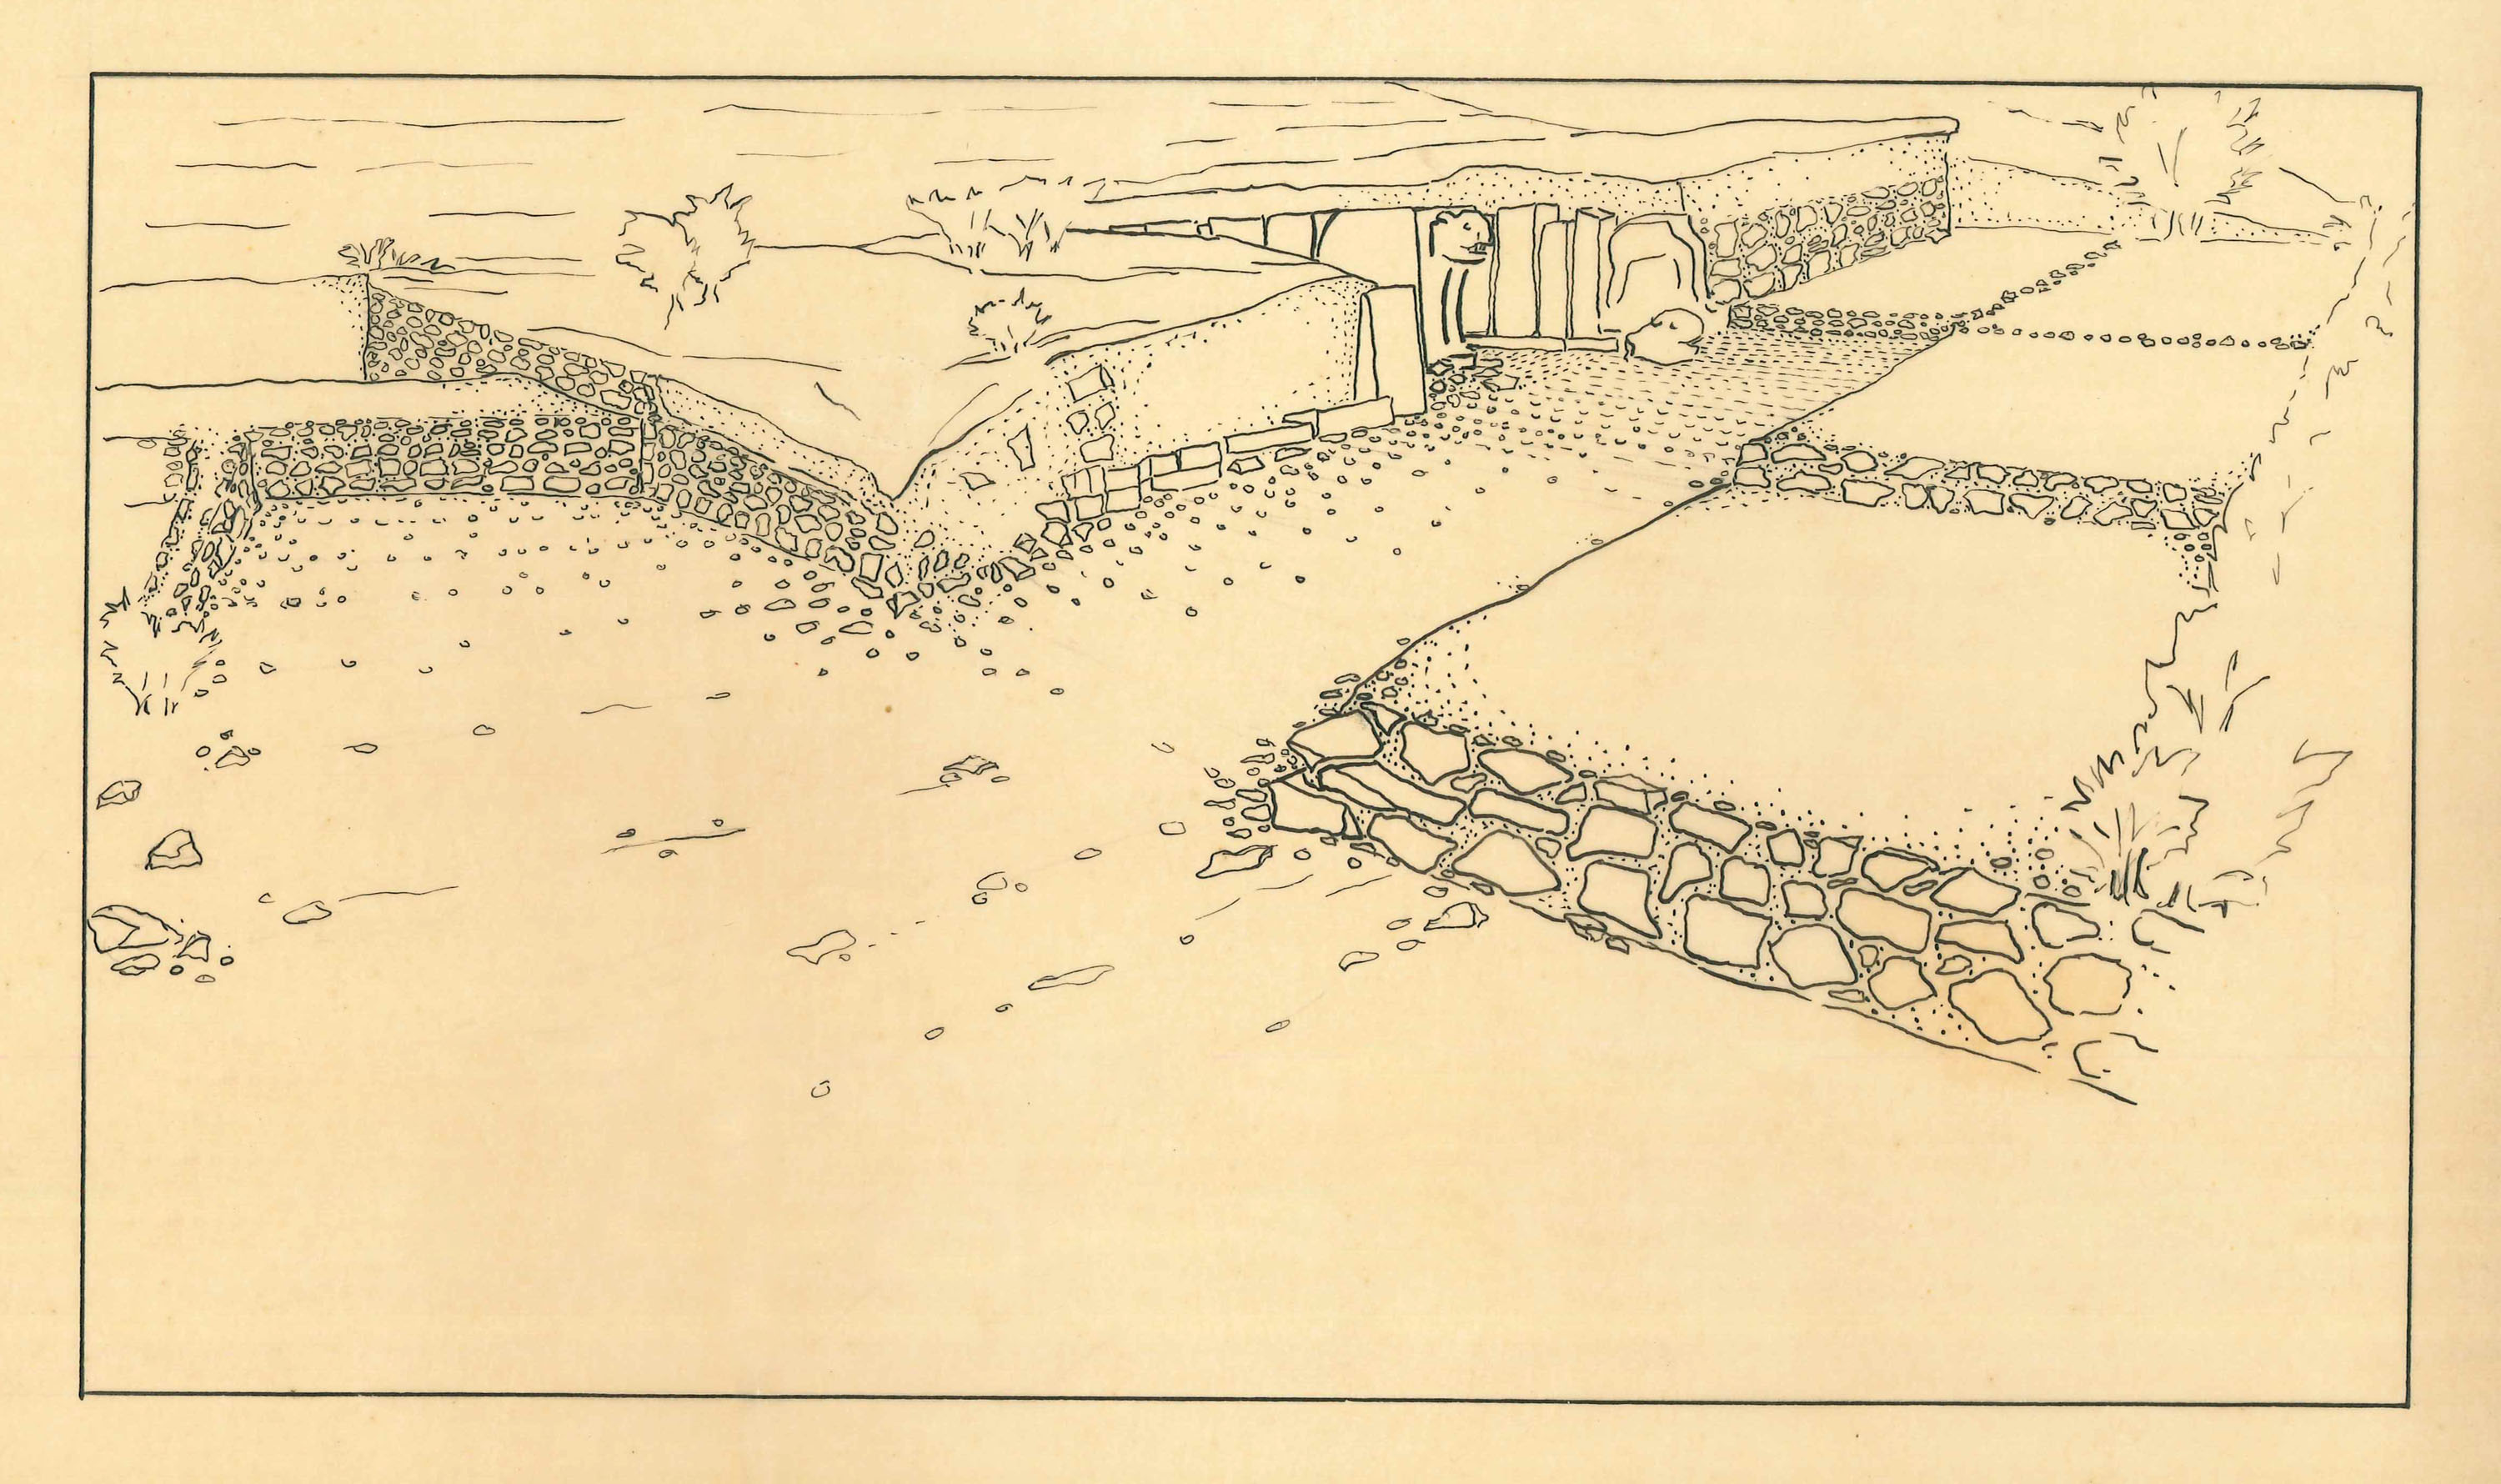 drawing of the Karatepe-Aslantaş excavation site